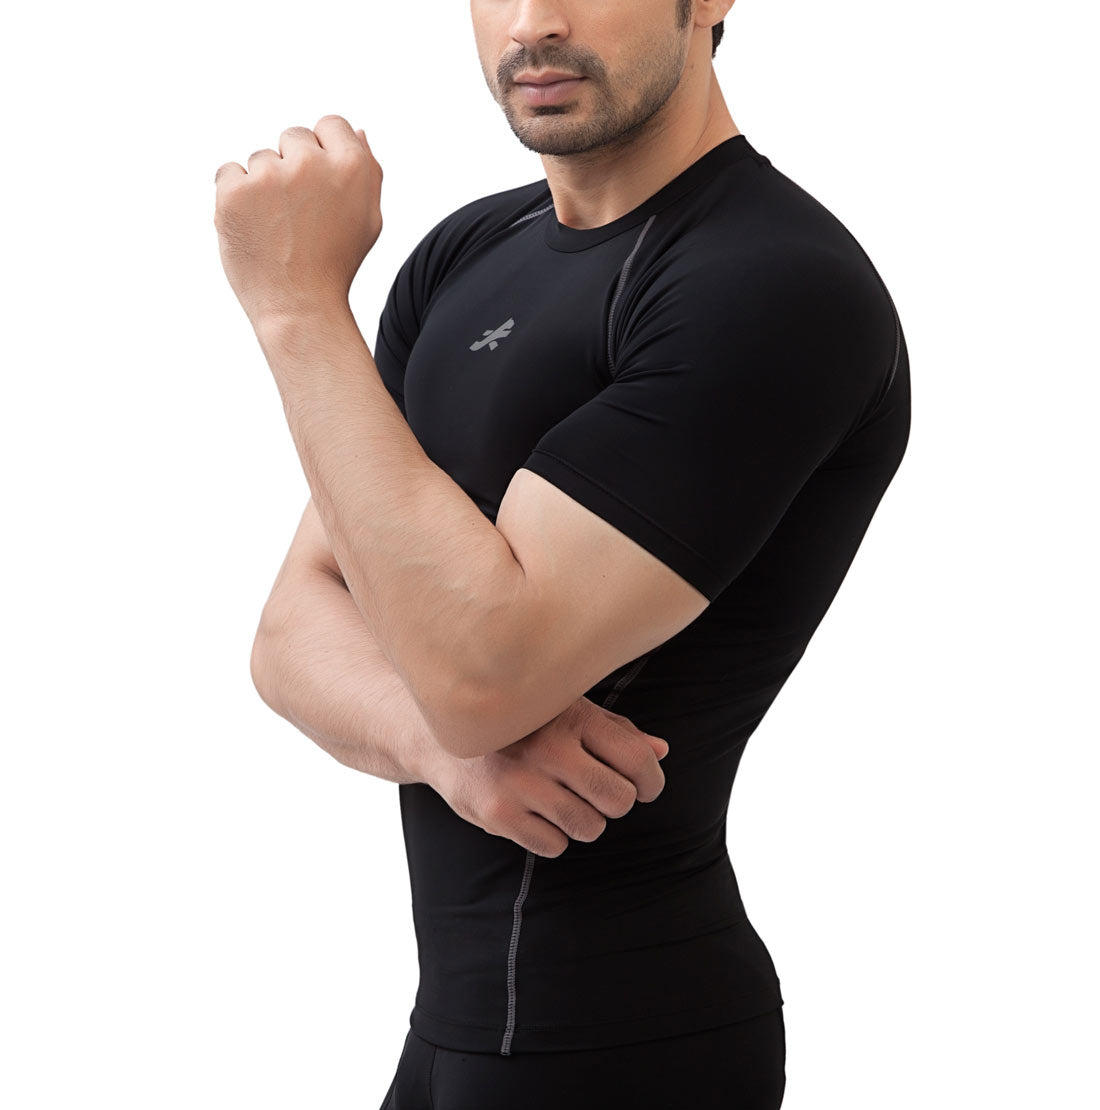 Nylon Compression Tshirt Full Sleeve Tights For Men (White)